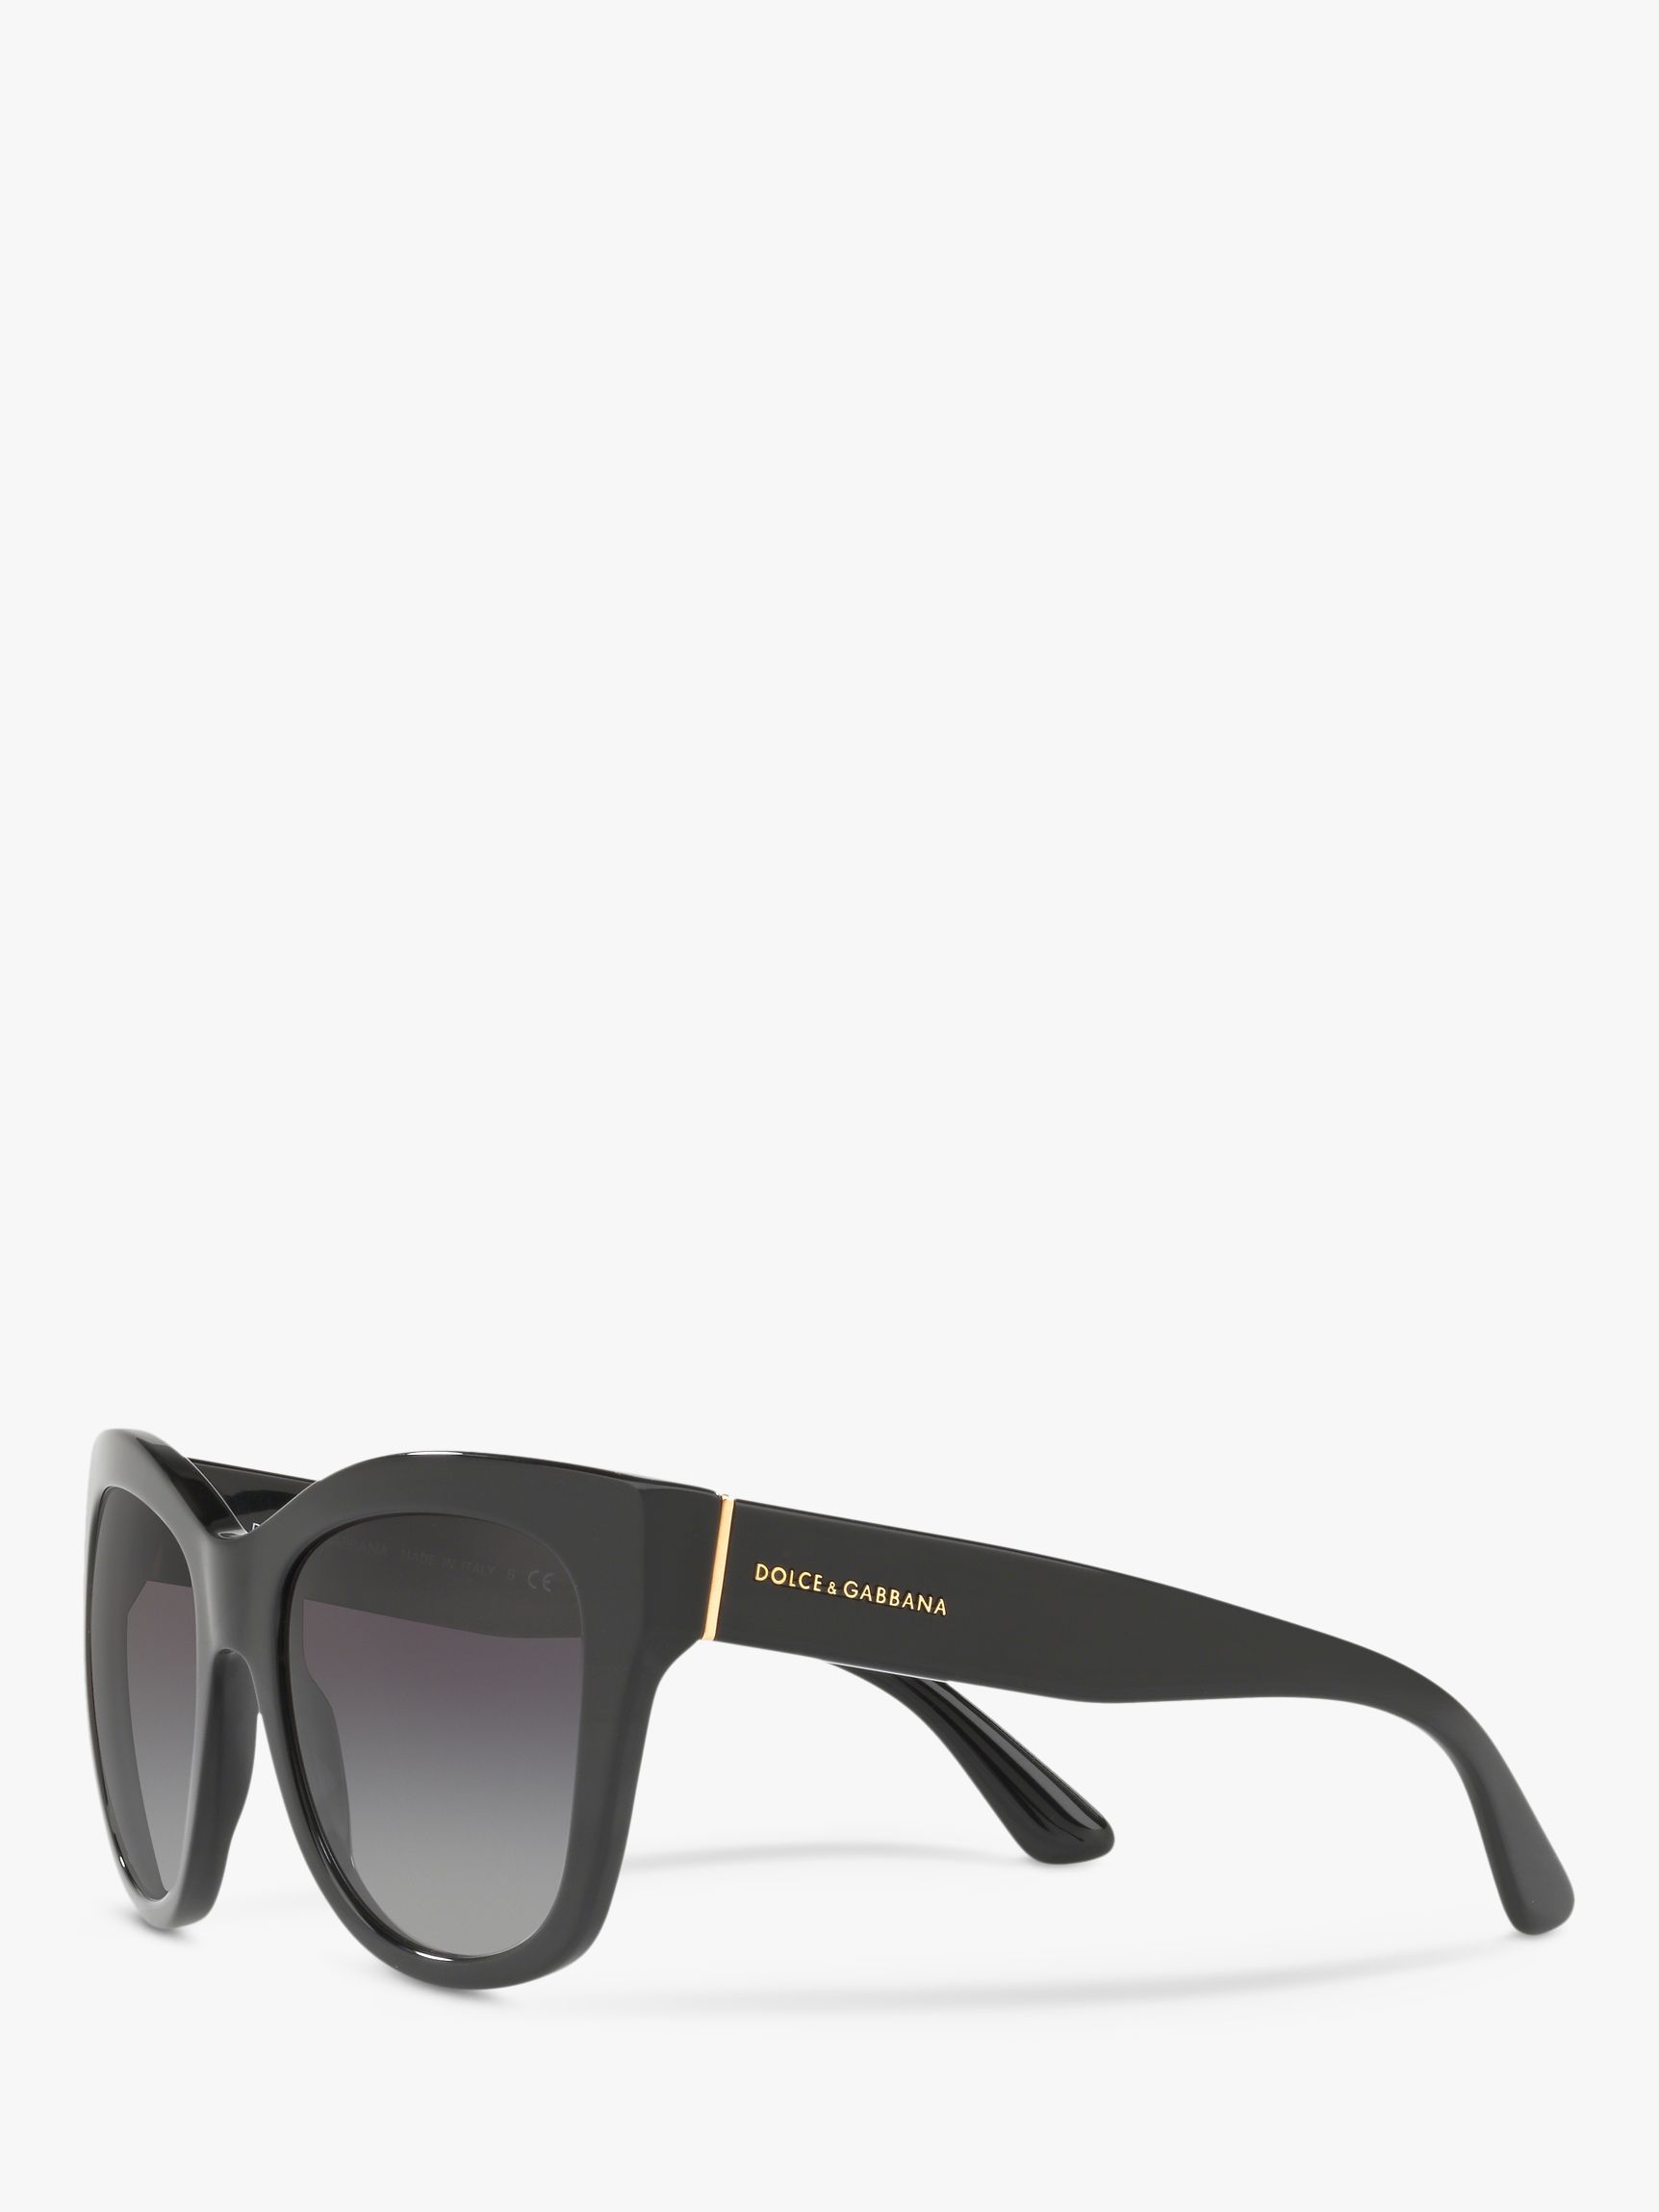 Dolce & Gabbana DG4270 Women's Square Sunglasses